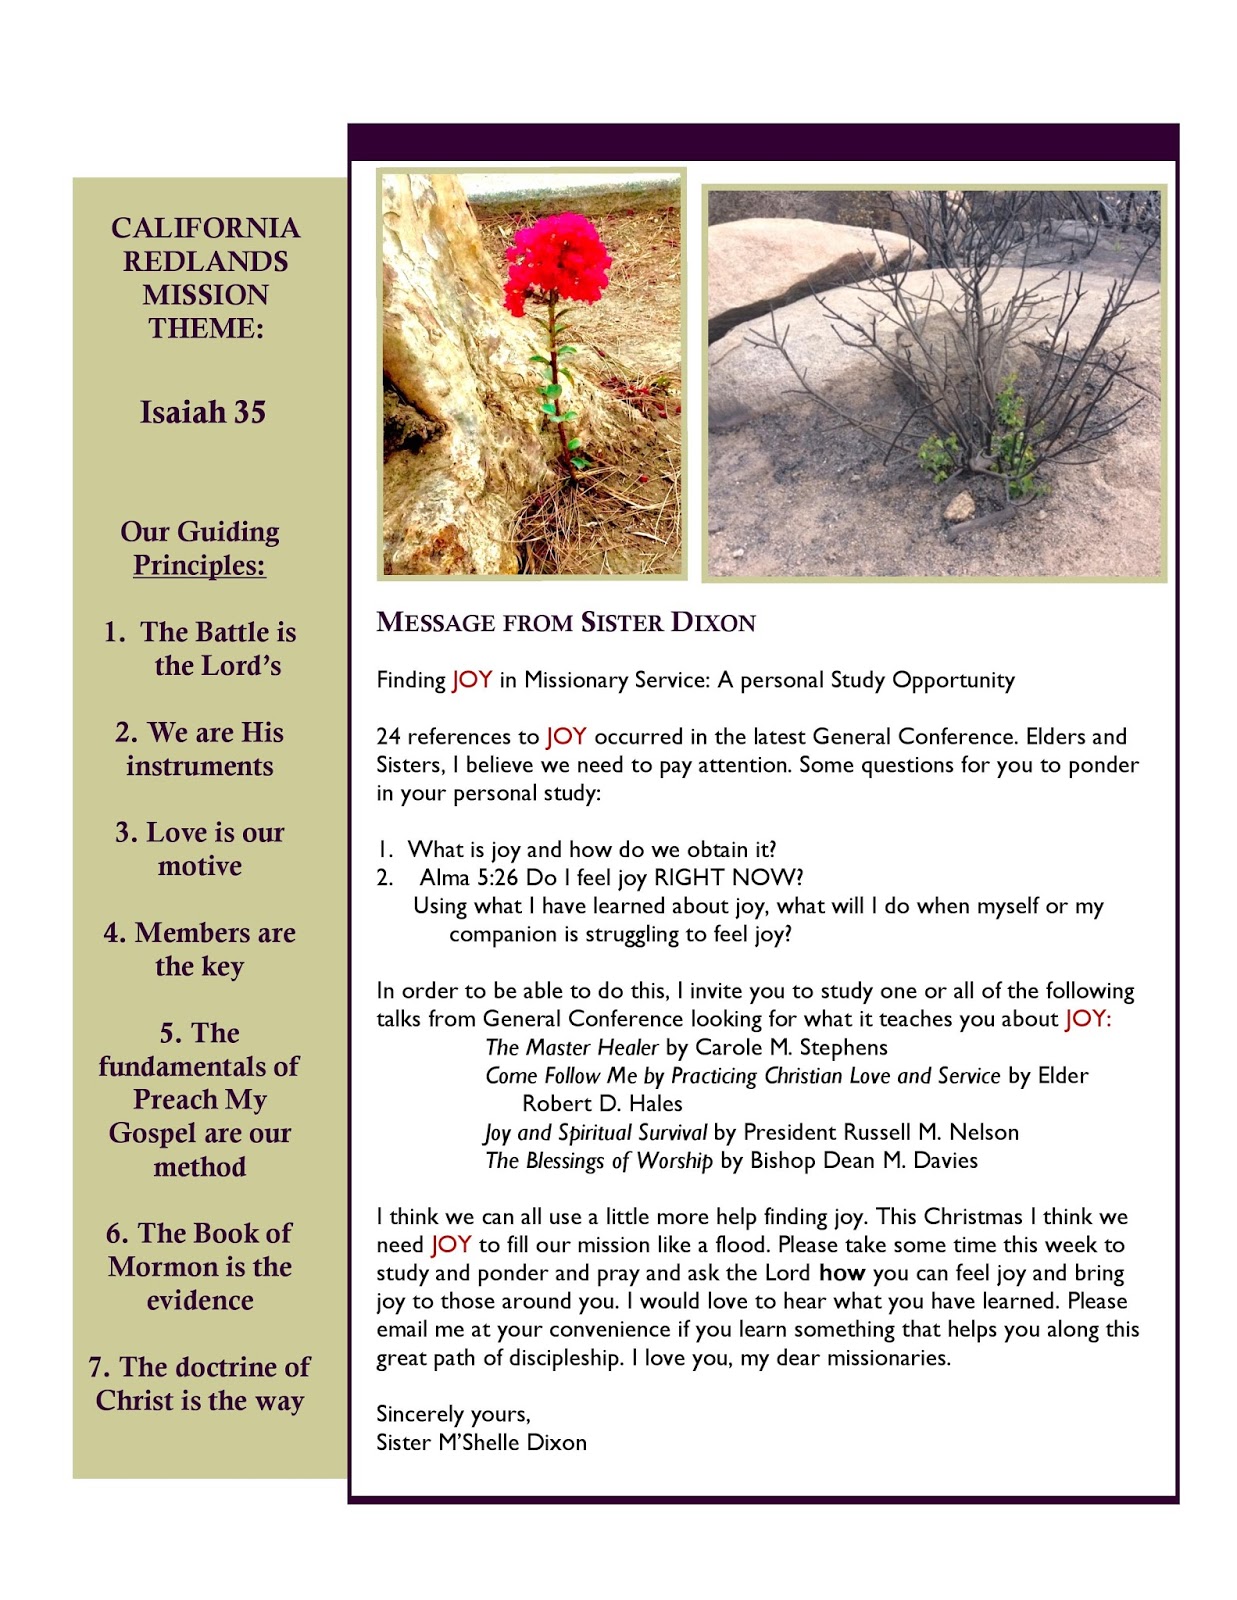 California Redlands Mission: November 2016 Newsletter